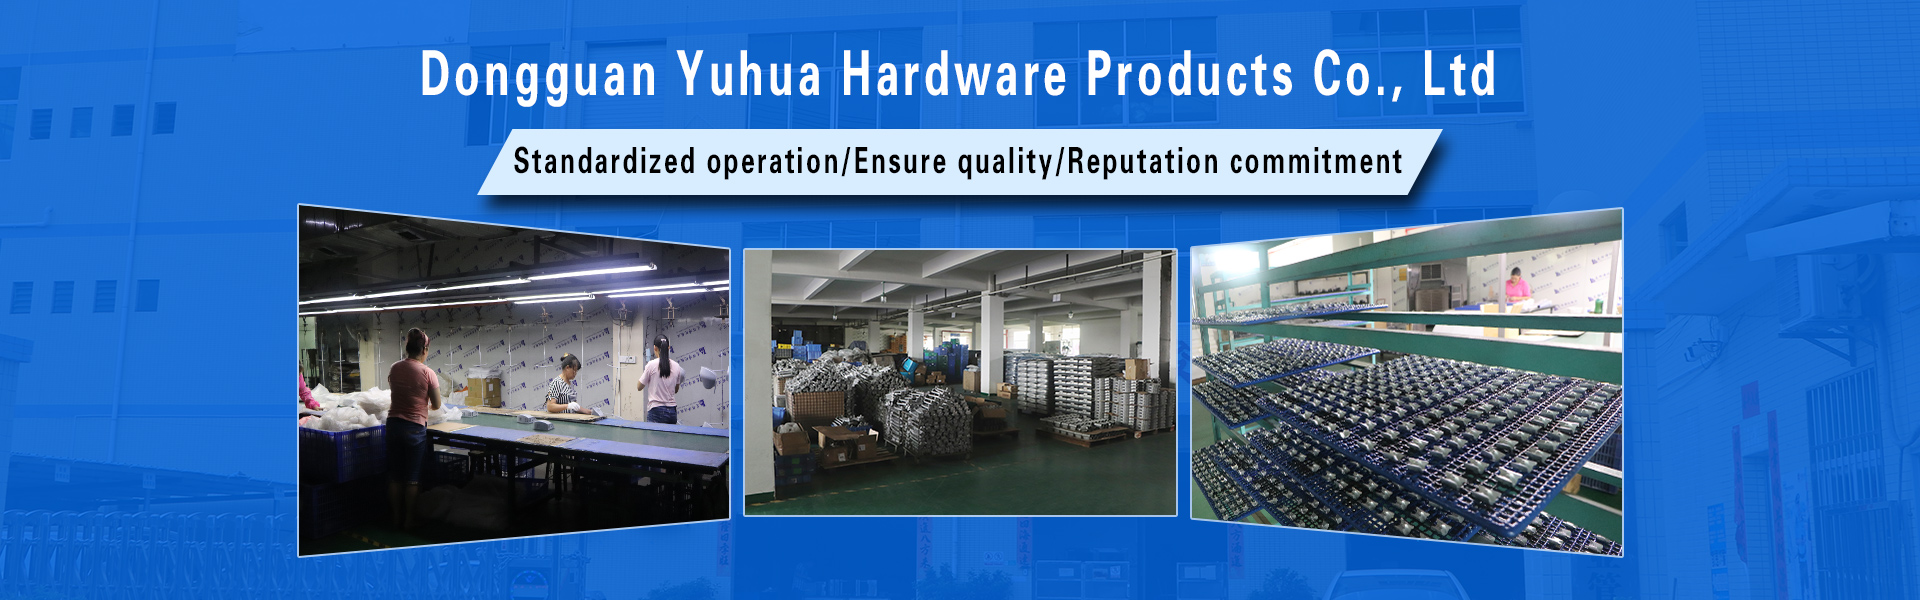 Dongguan Yuhua Hardware Products Co., Ltd.